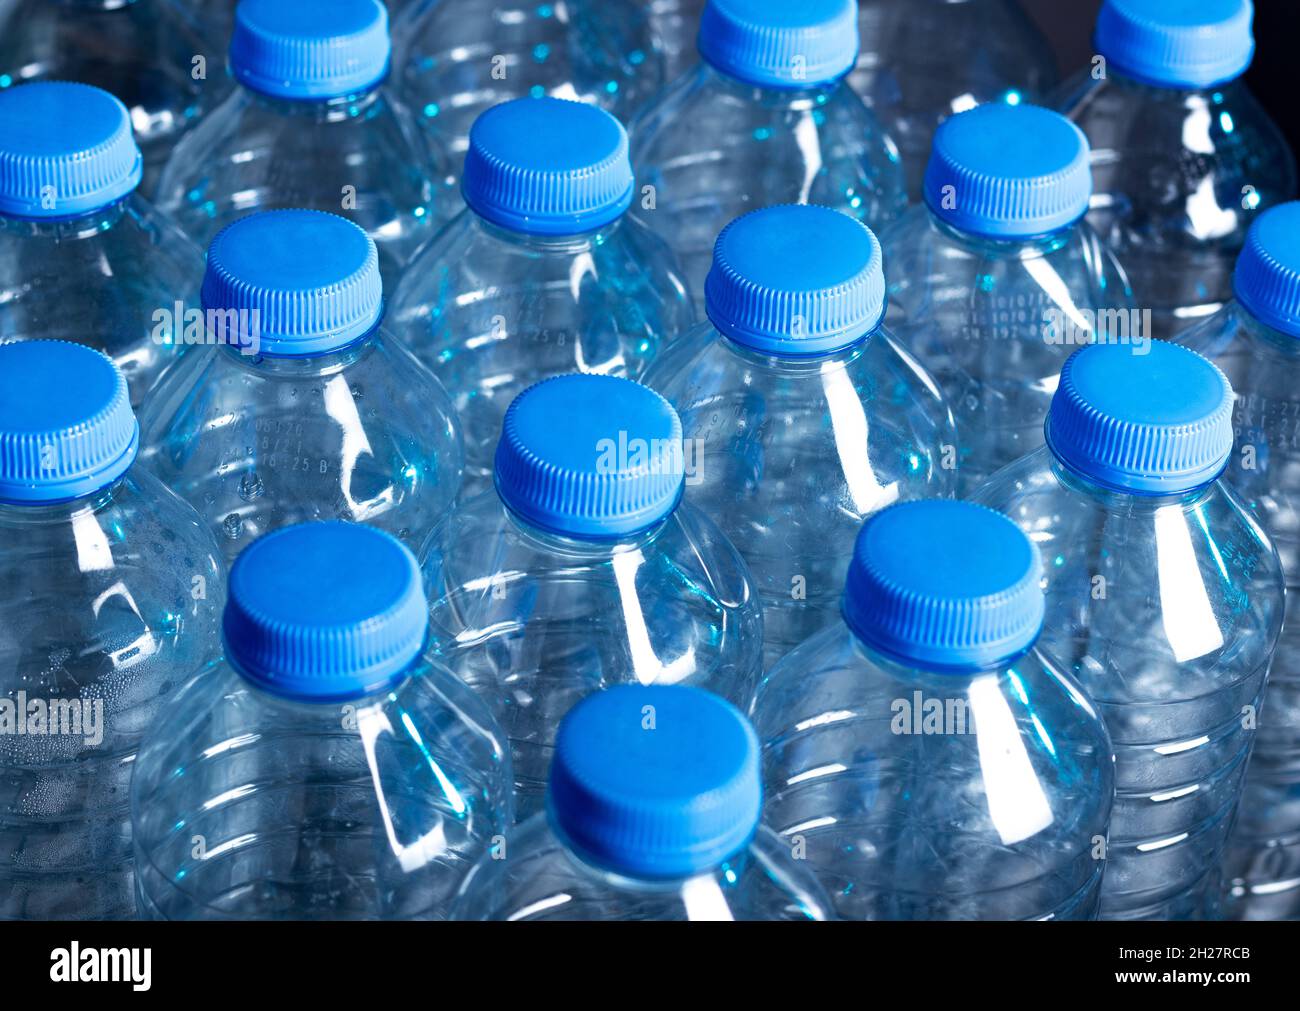 Close up photo of plastic bottles . Waste management concept. Stock Photo